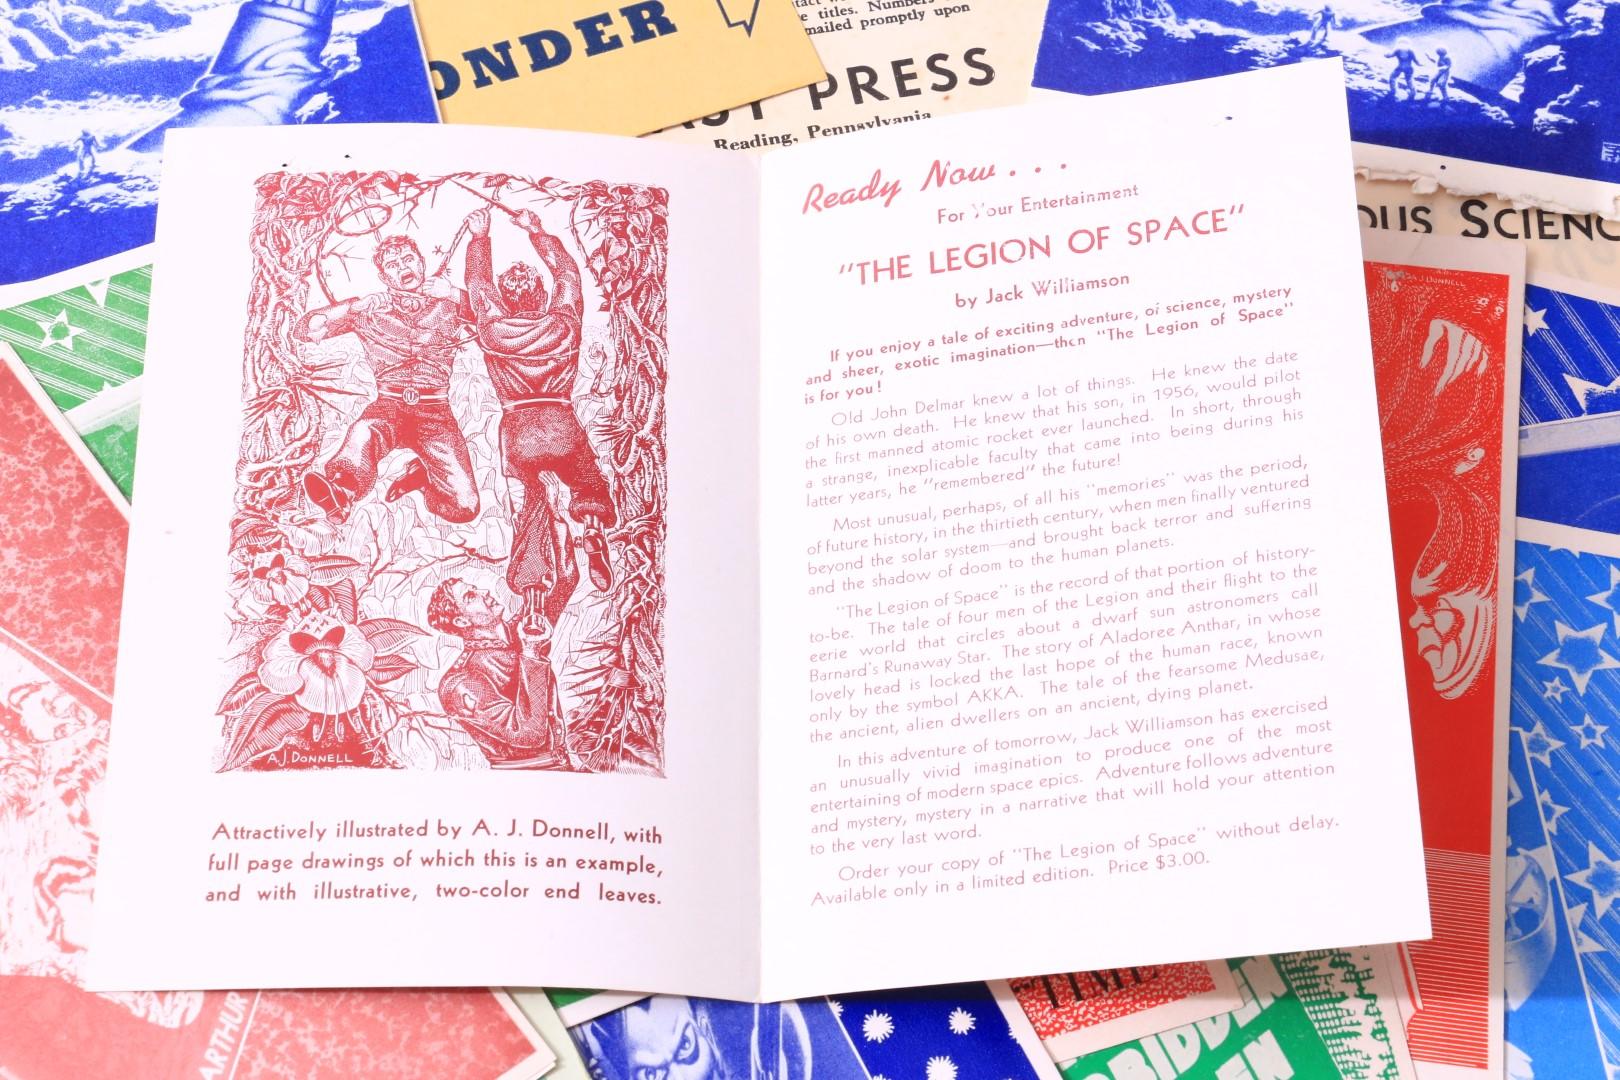 Lloyd Eshbach - A Collection of Fantasy Press Ephemera - Fantasy Press, 1950s, .